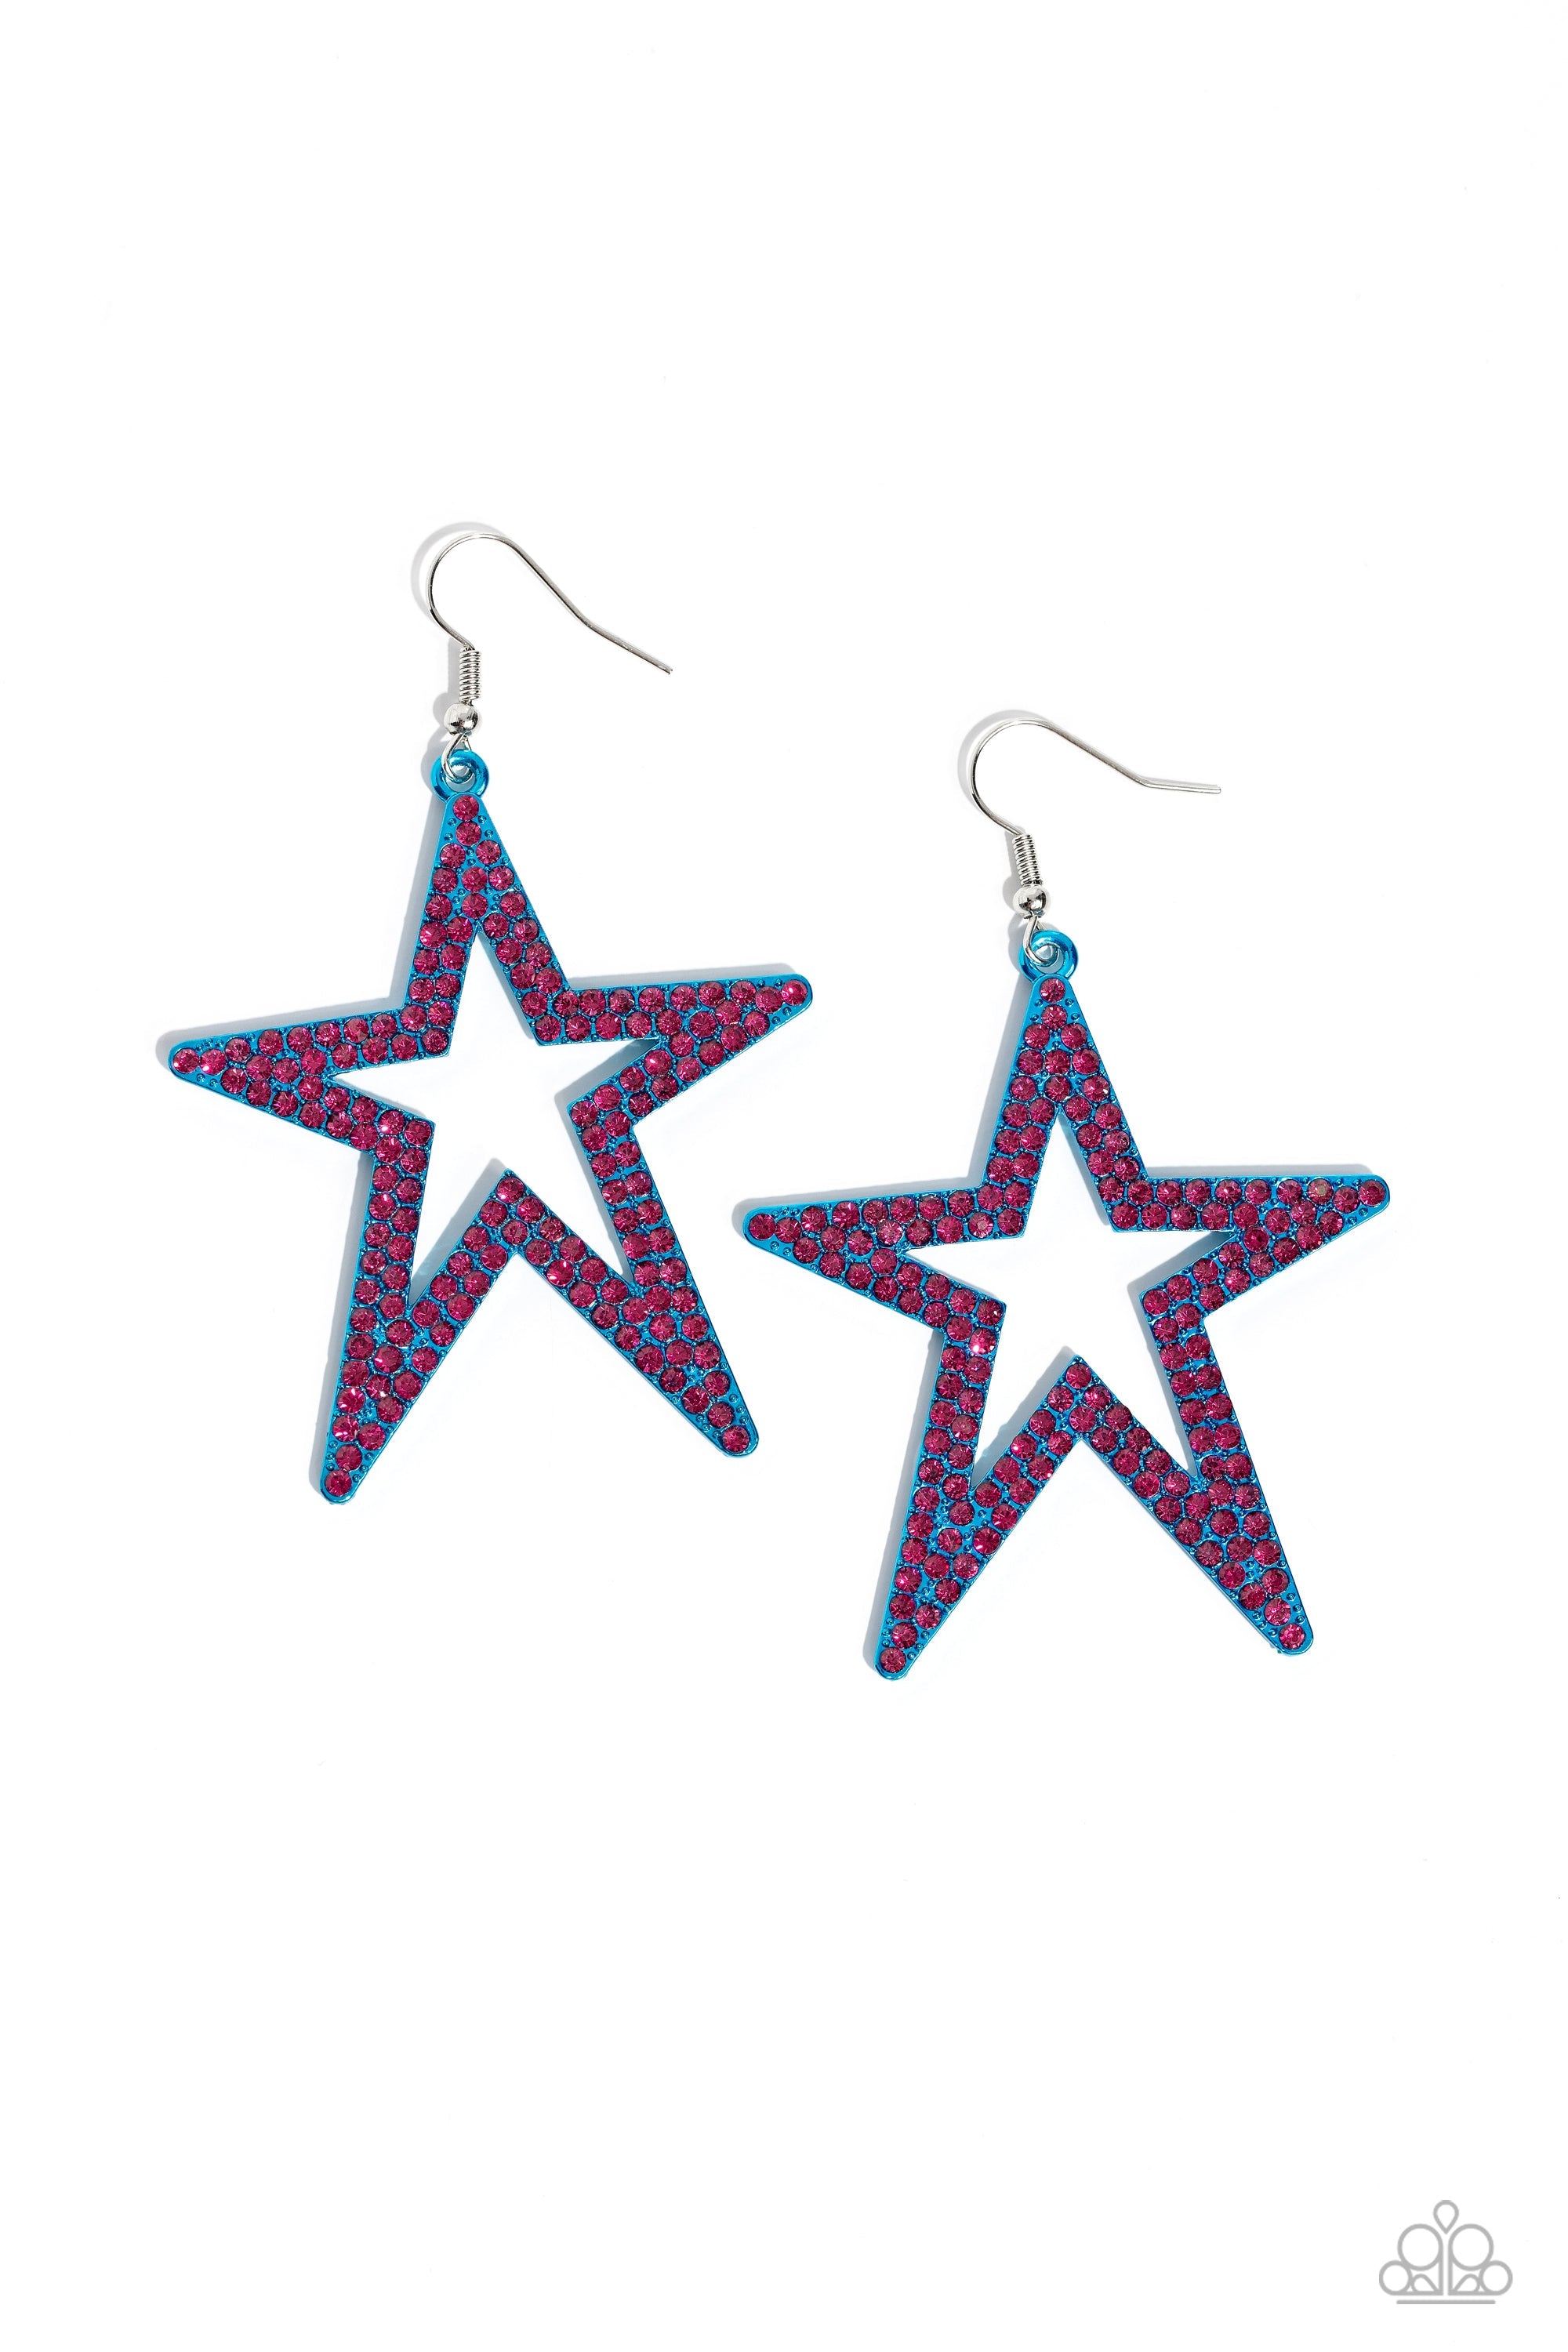 Rockstar Energy Blue & Pink Rhinestone Star Earrings - Paparazzi Accessories- lightbox - CarasShop.com - $5 Jewelry by Cara Jewels